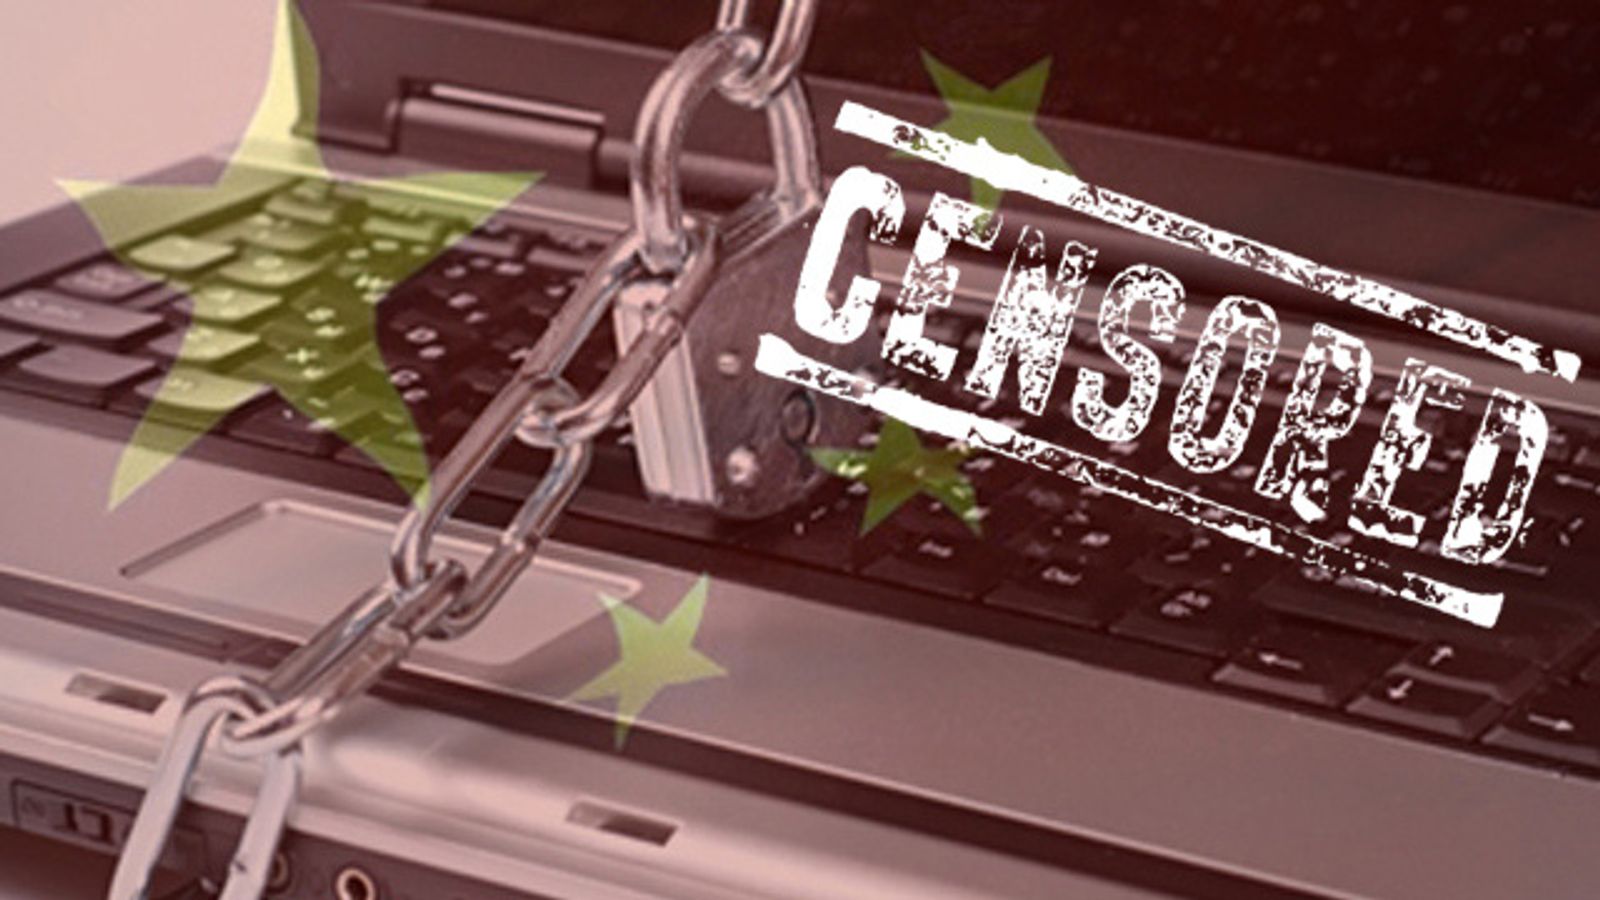 China Nixes Plan to Install Anti-Porn Software on PCs